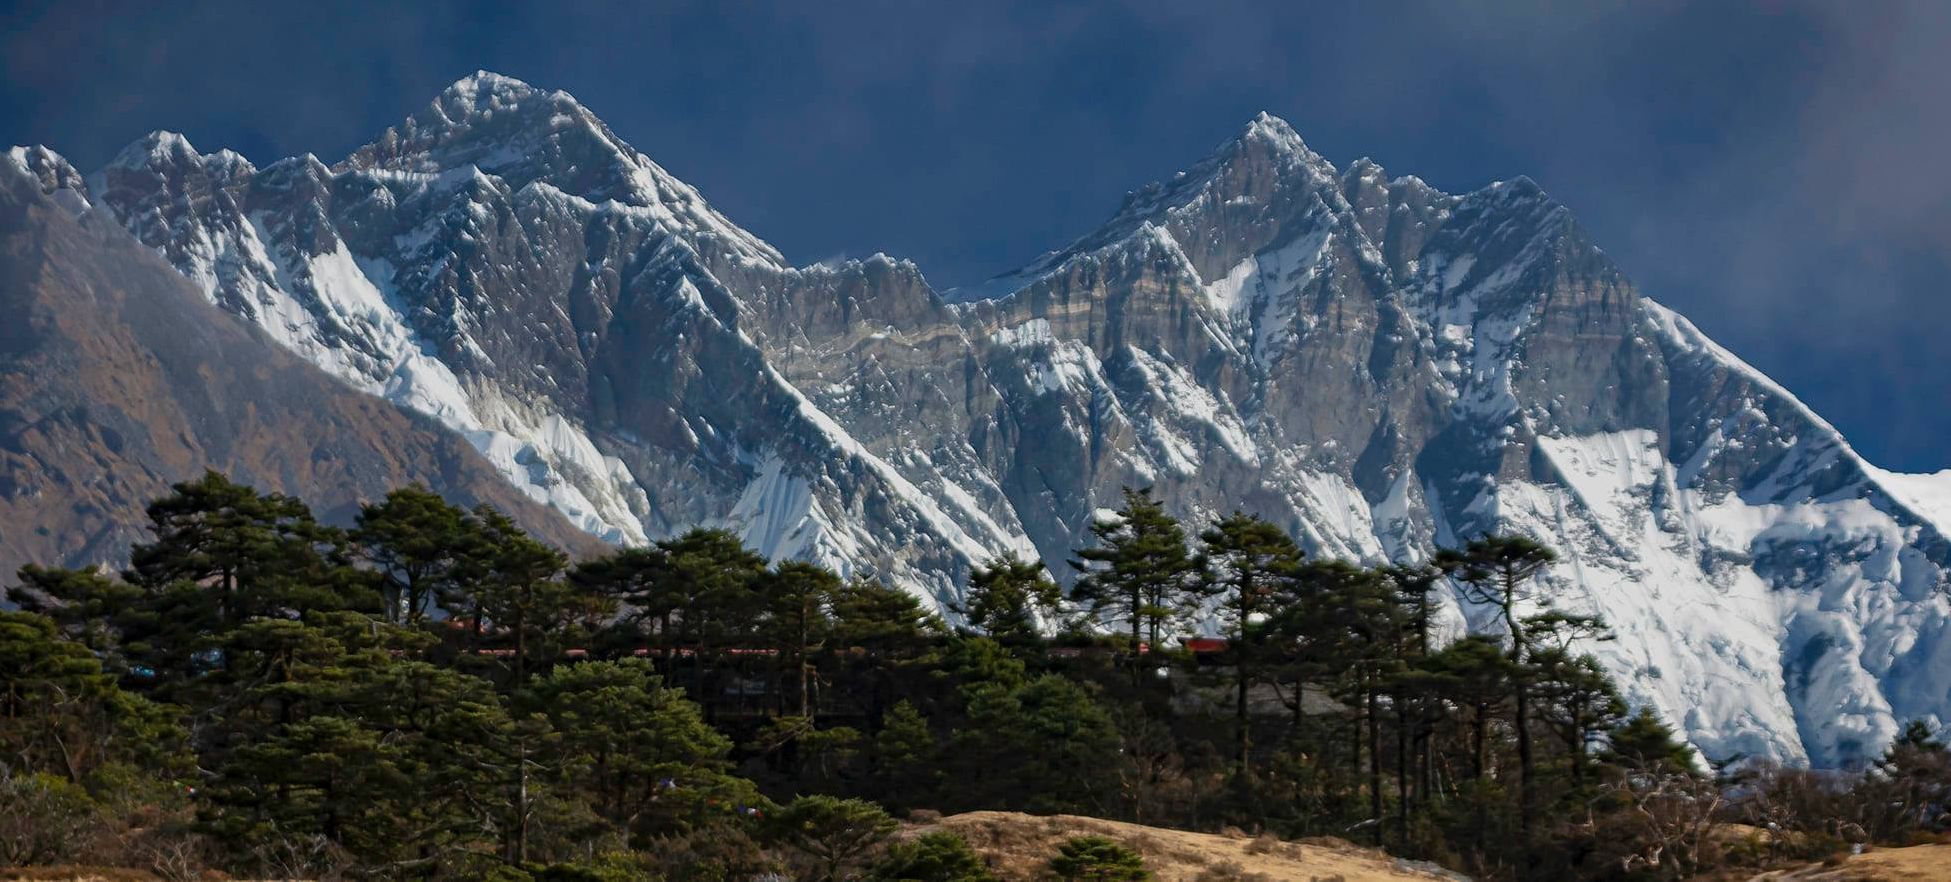 Nuptse, Everest, Lhotse from Thyangboche